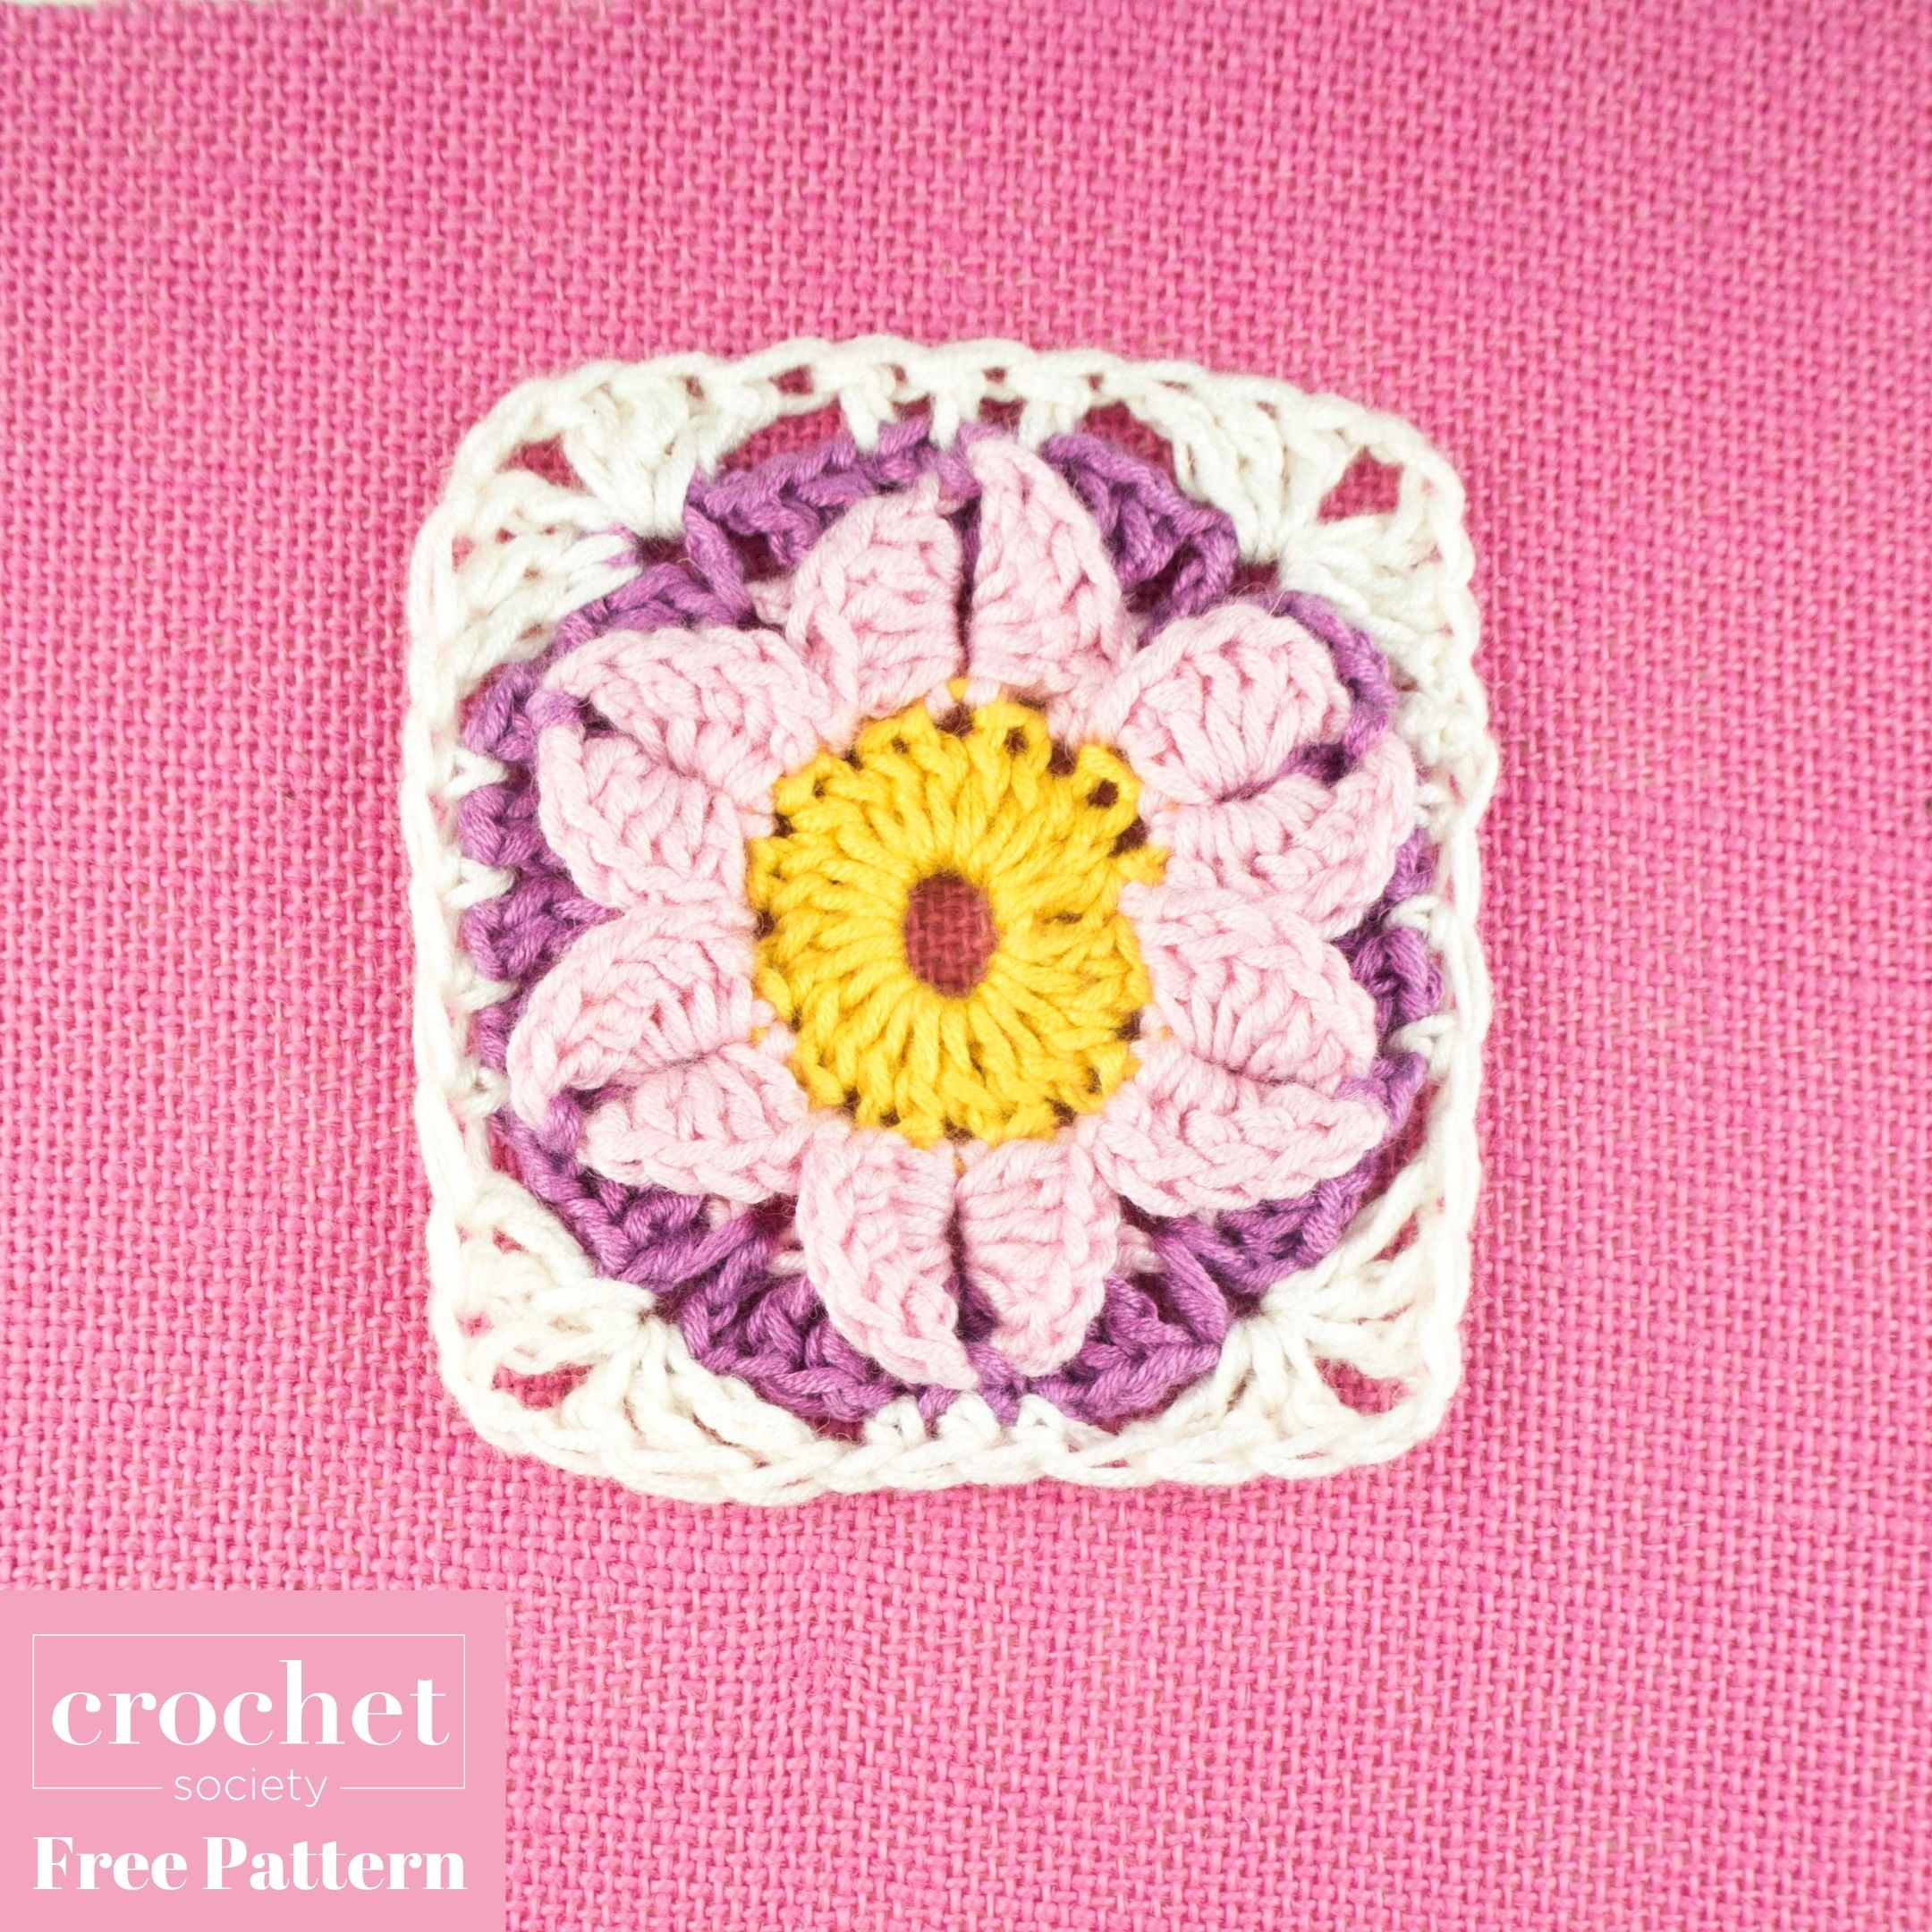 FREE crochet pattern: floral granny square